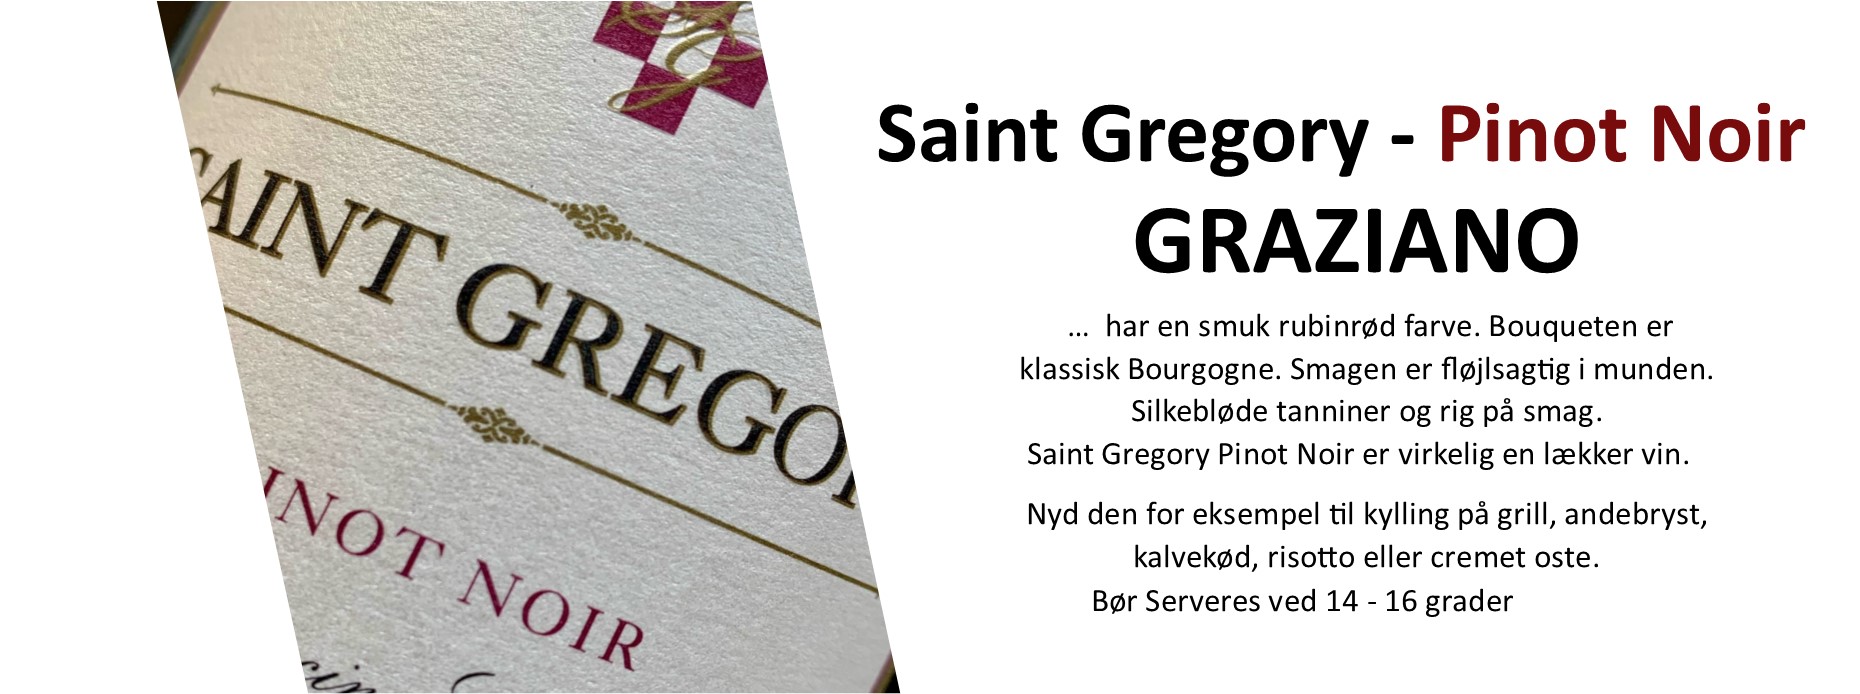 Saint Gregory Pinot Noir Graziano banner 2